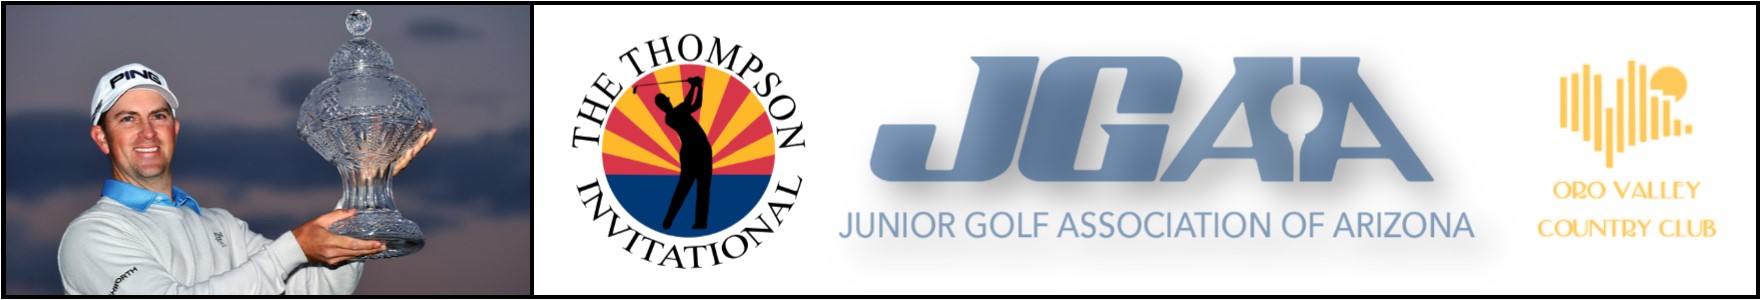 Junior Golf Association of Arizona